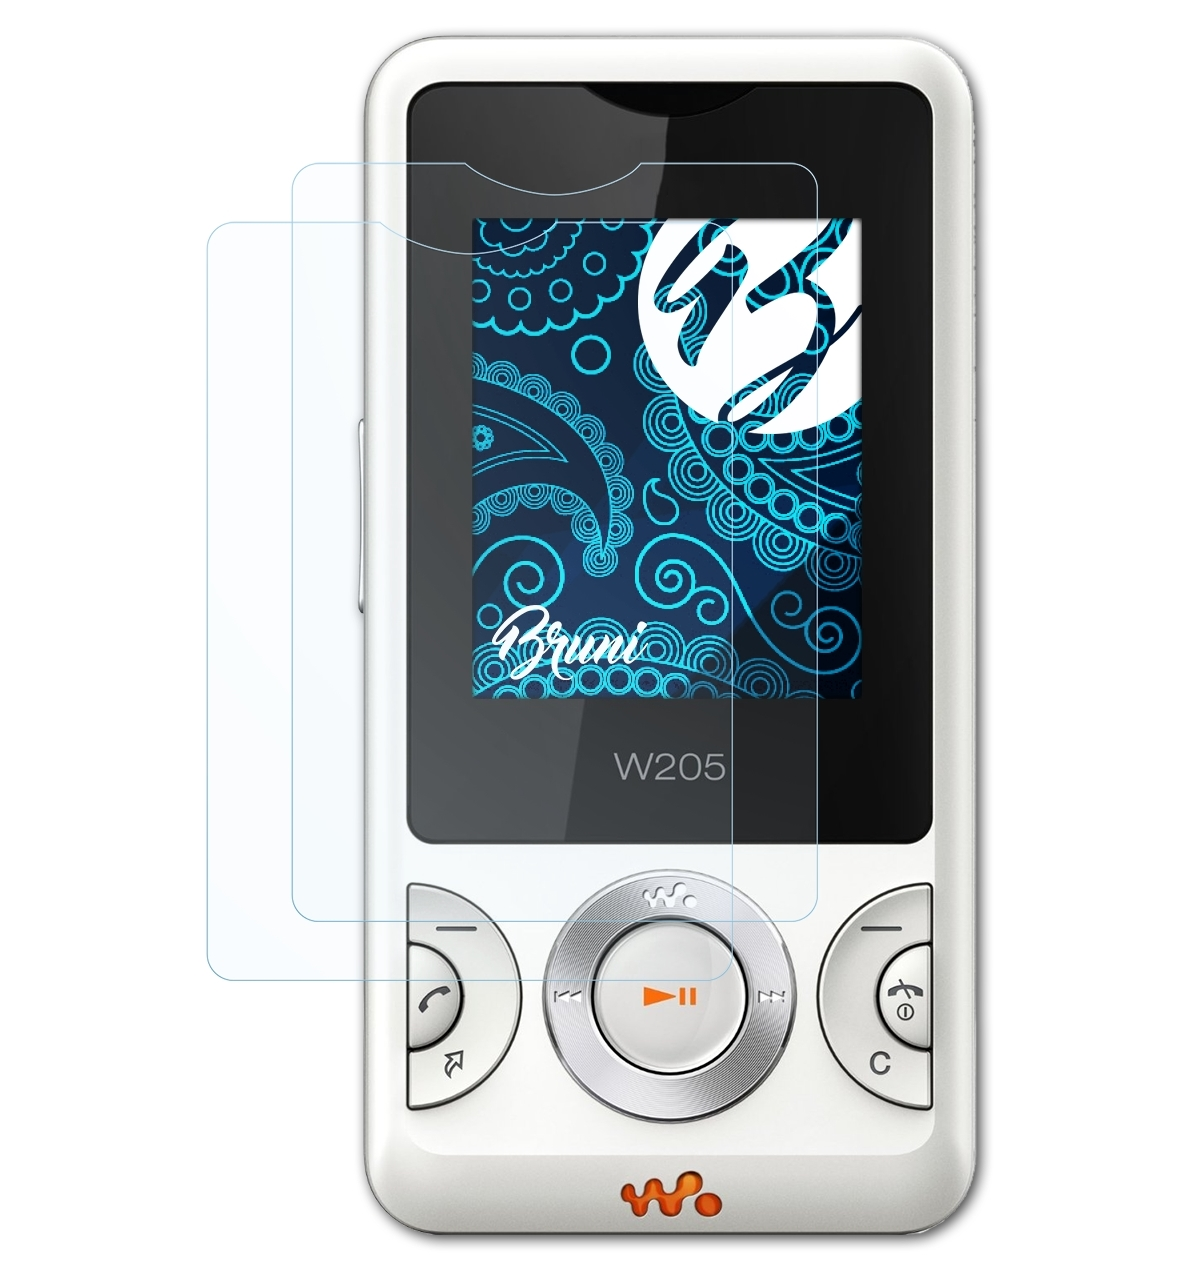 BRUNI W205) Schutzfolie(für 2x Basics-Clear Sony-Ericsson